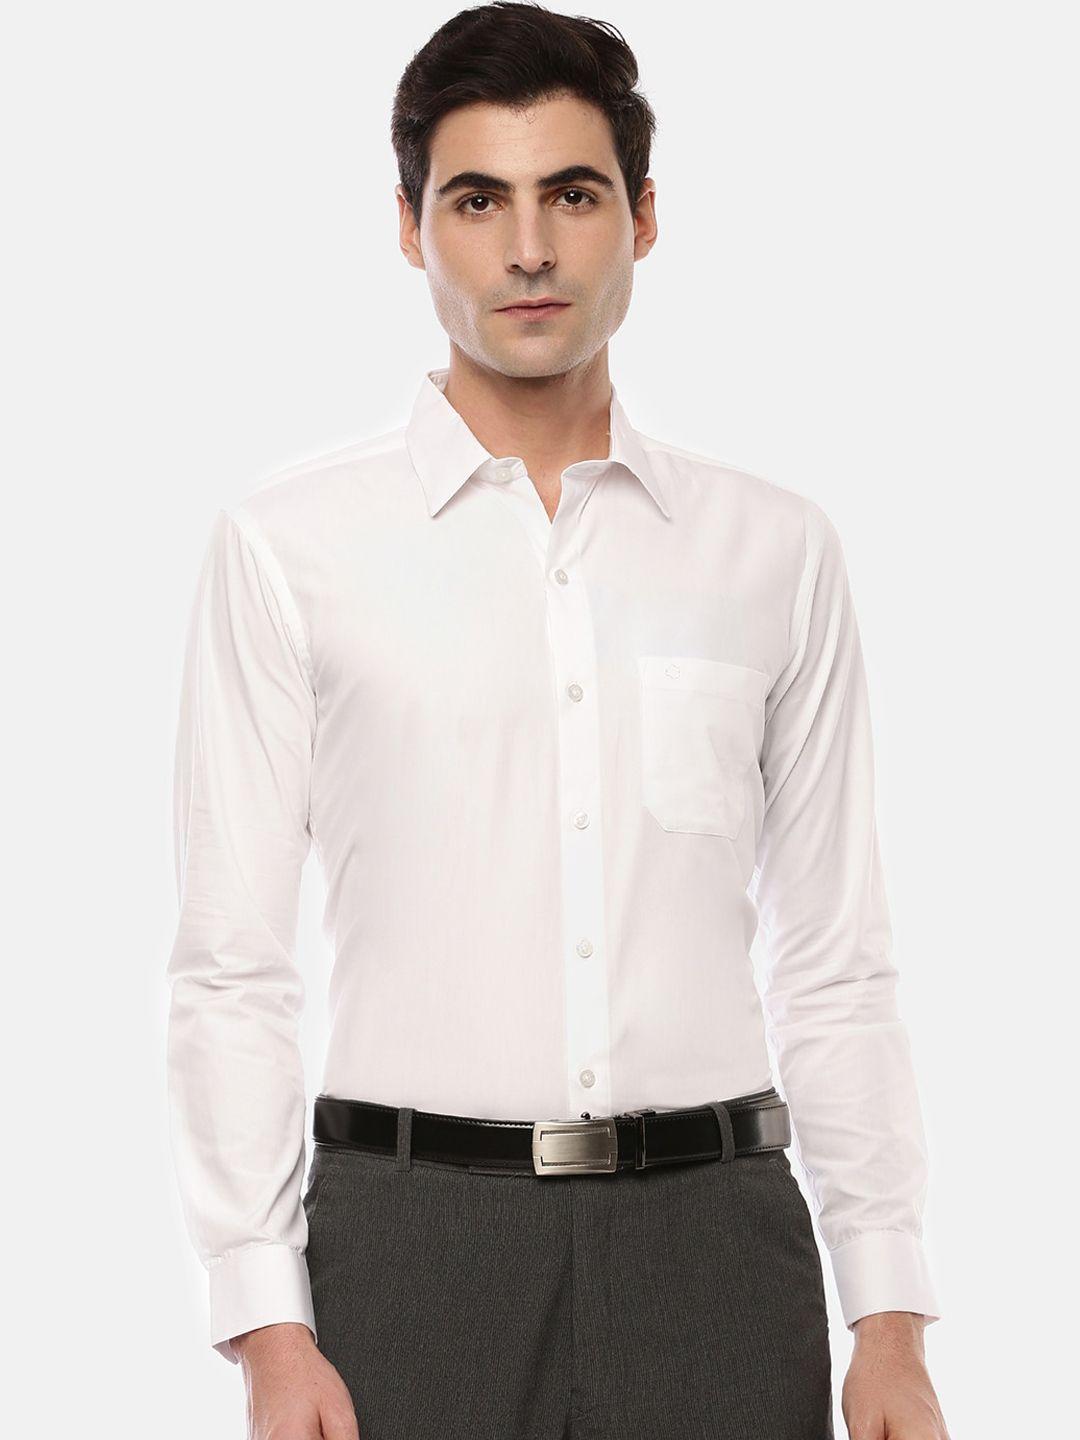 jansons men white regular fit solid formal shirt